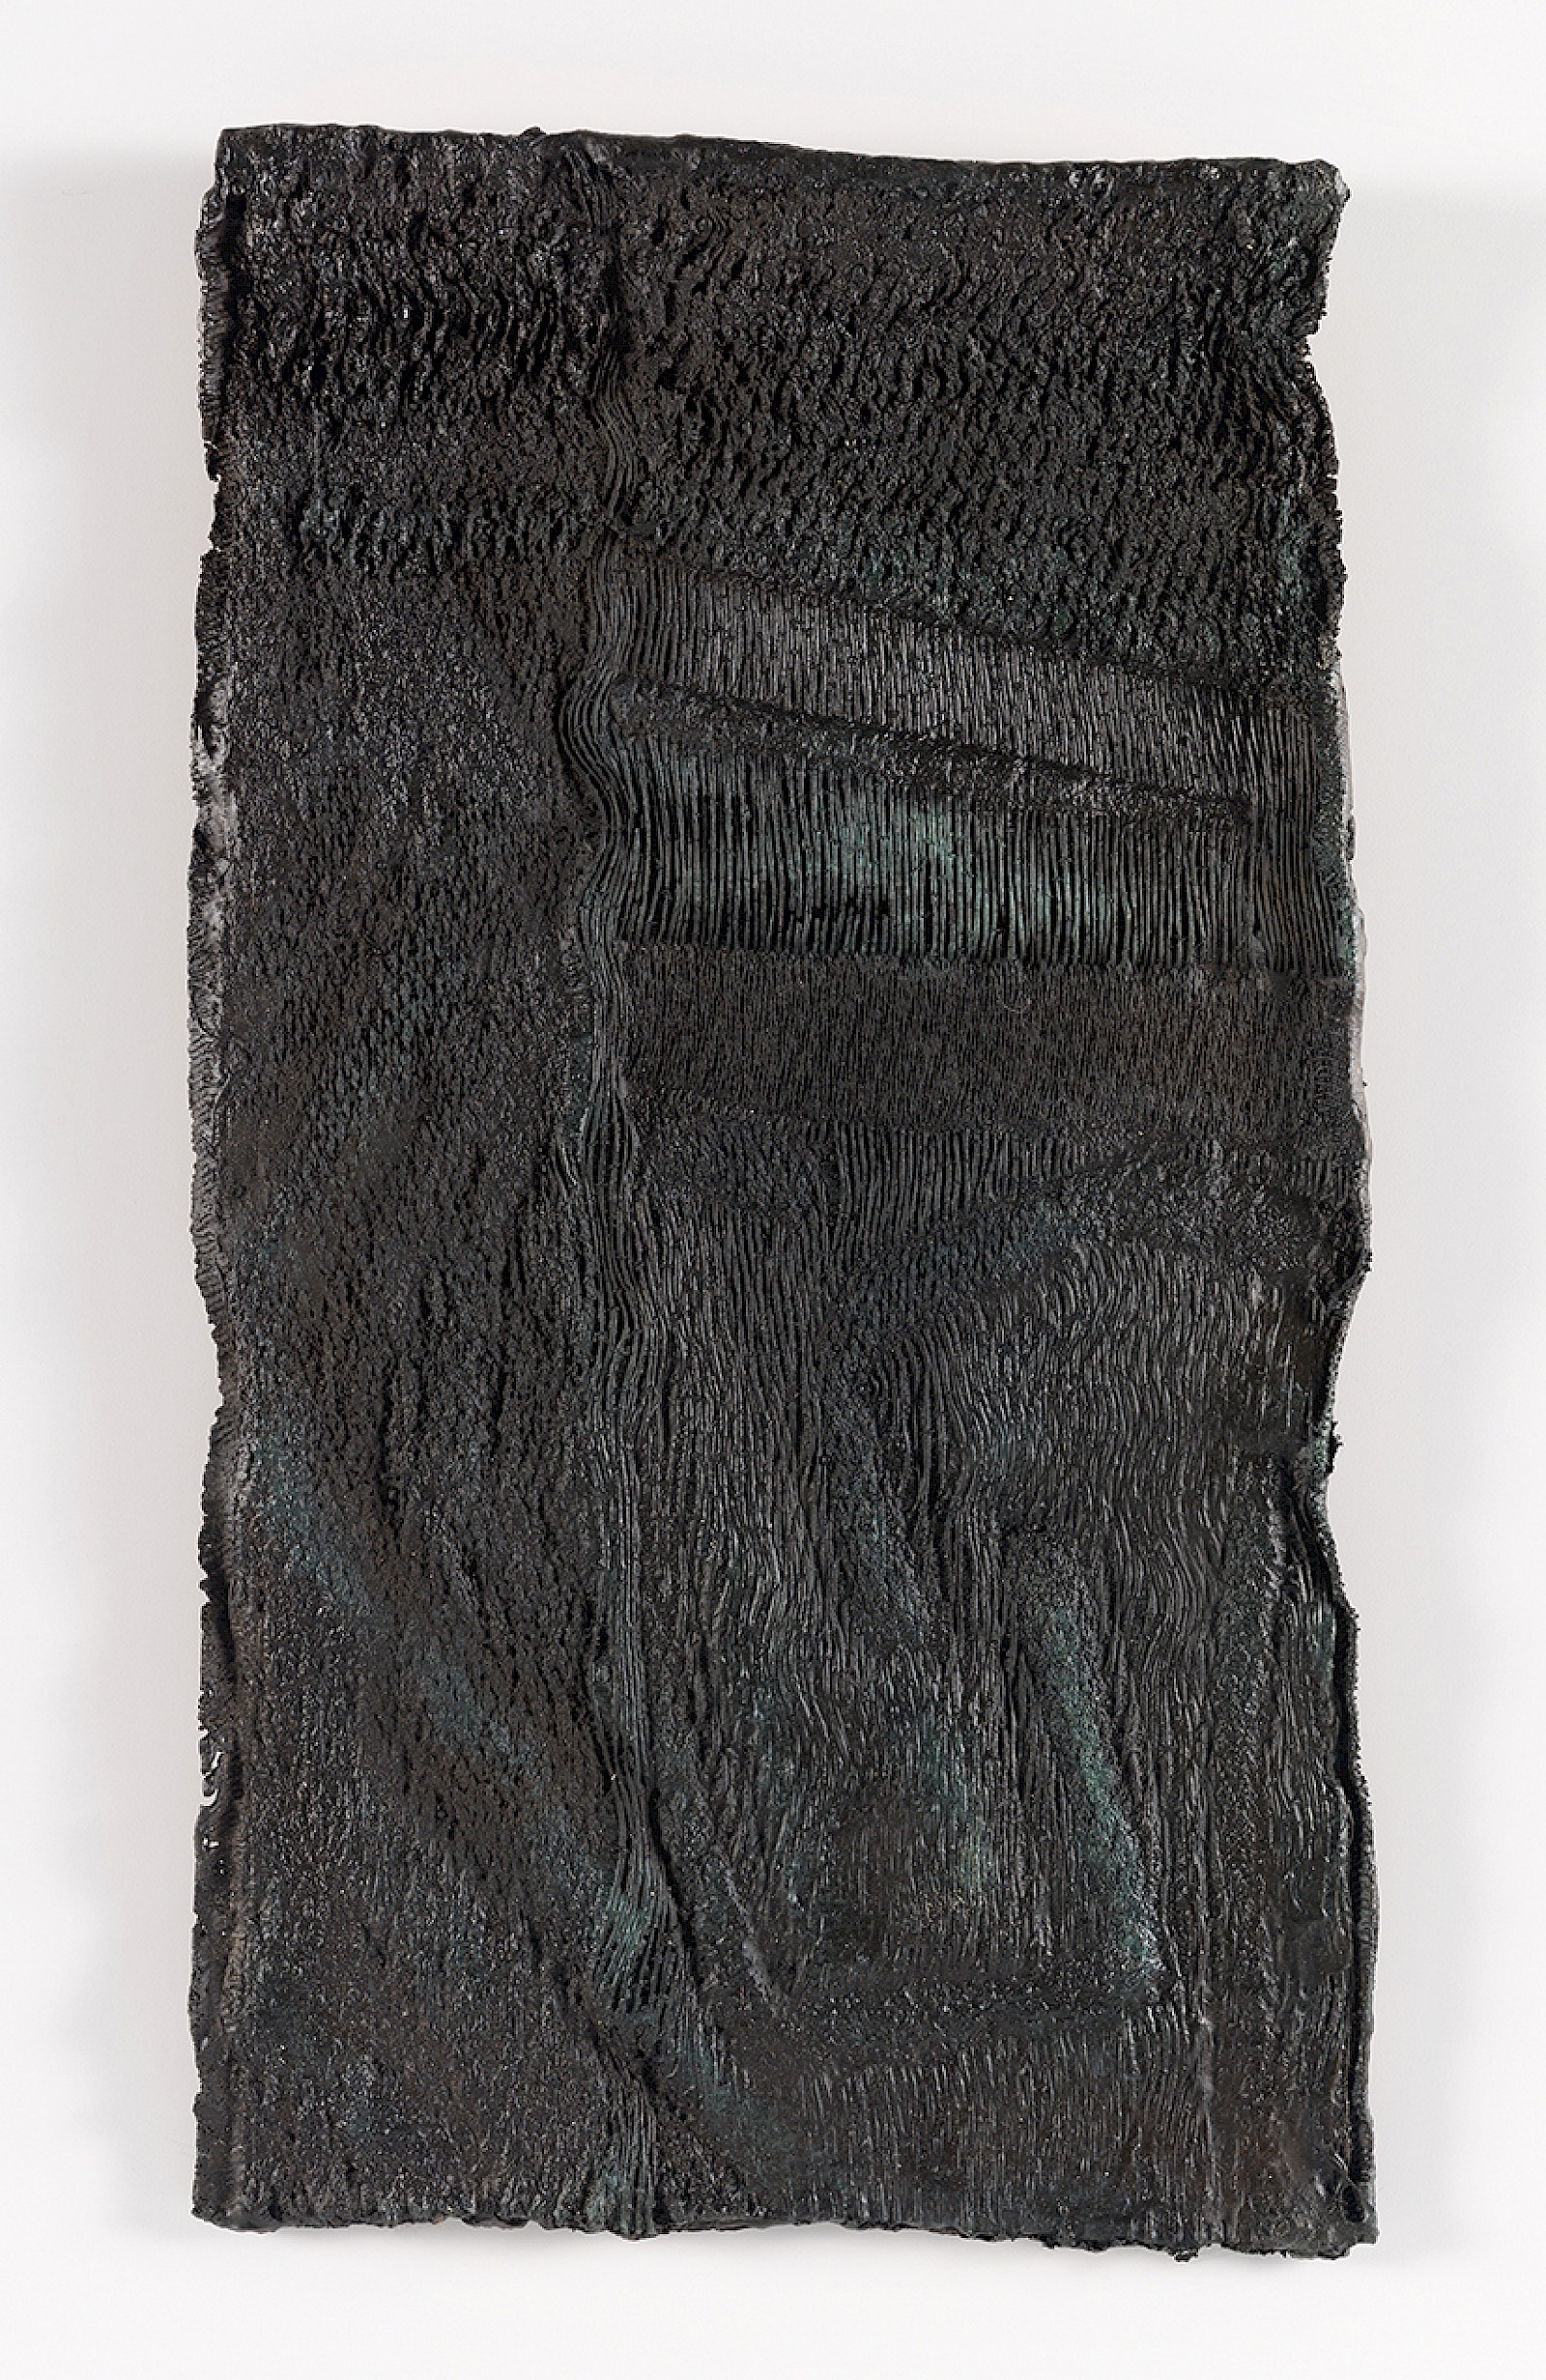 Image - Bronzamic, Bronze, Size: 21 x 37 x 0.5 cm